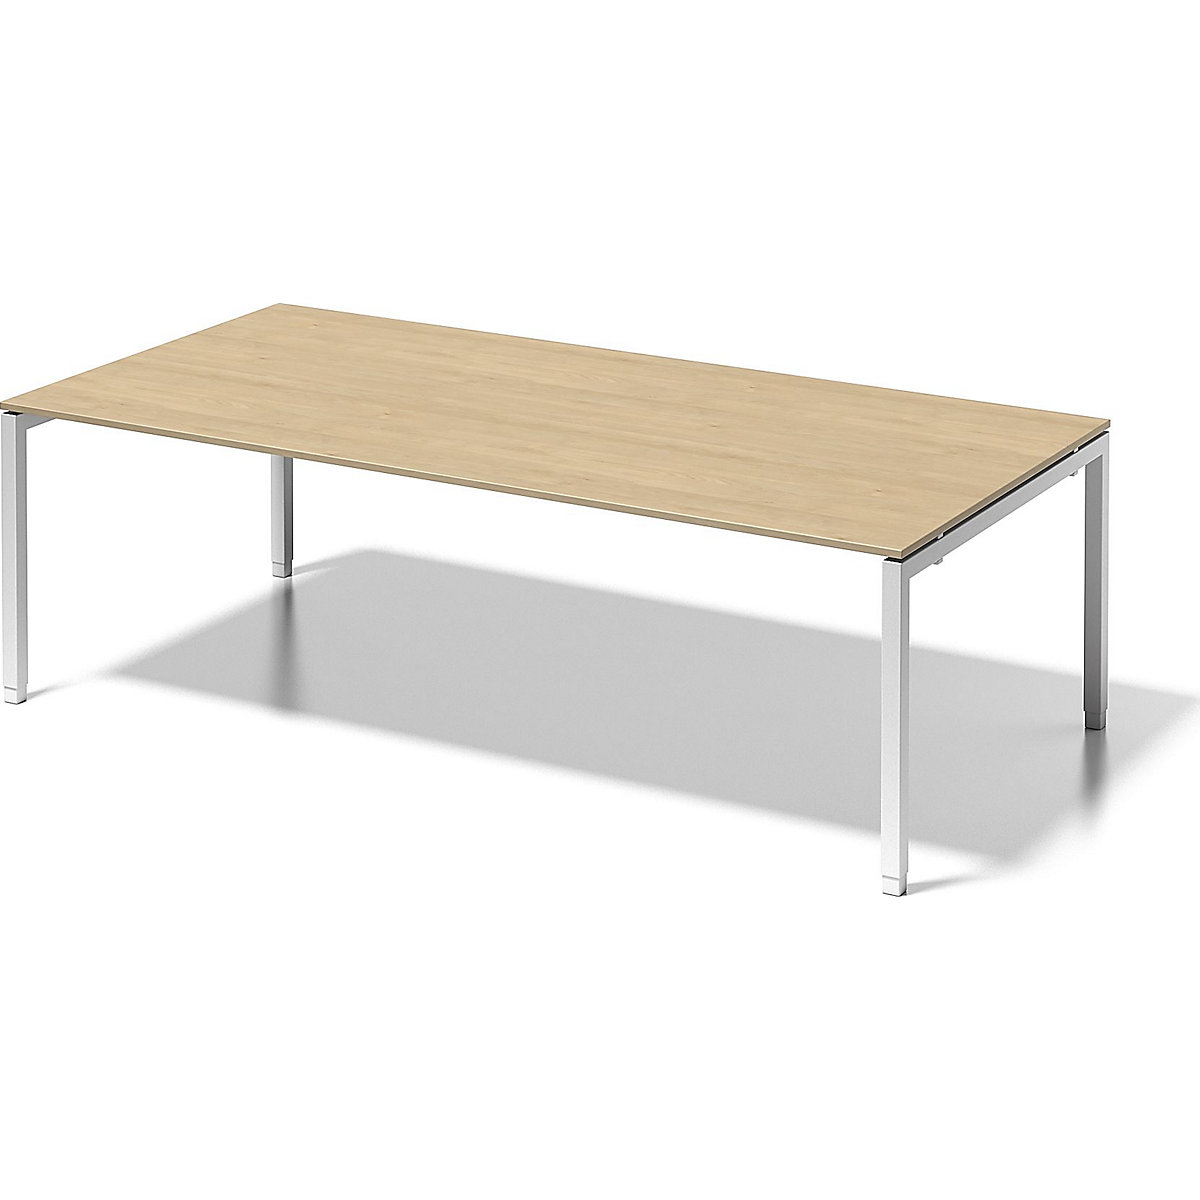 CITO desk, U-frame – BISLEY, HxWxD 650 – 850 x 2400 x 1200 mm, white frame, maple tabletop-3